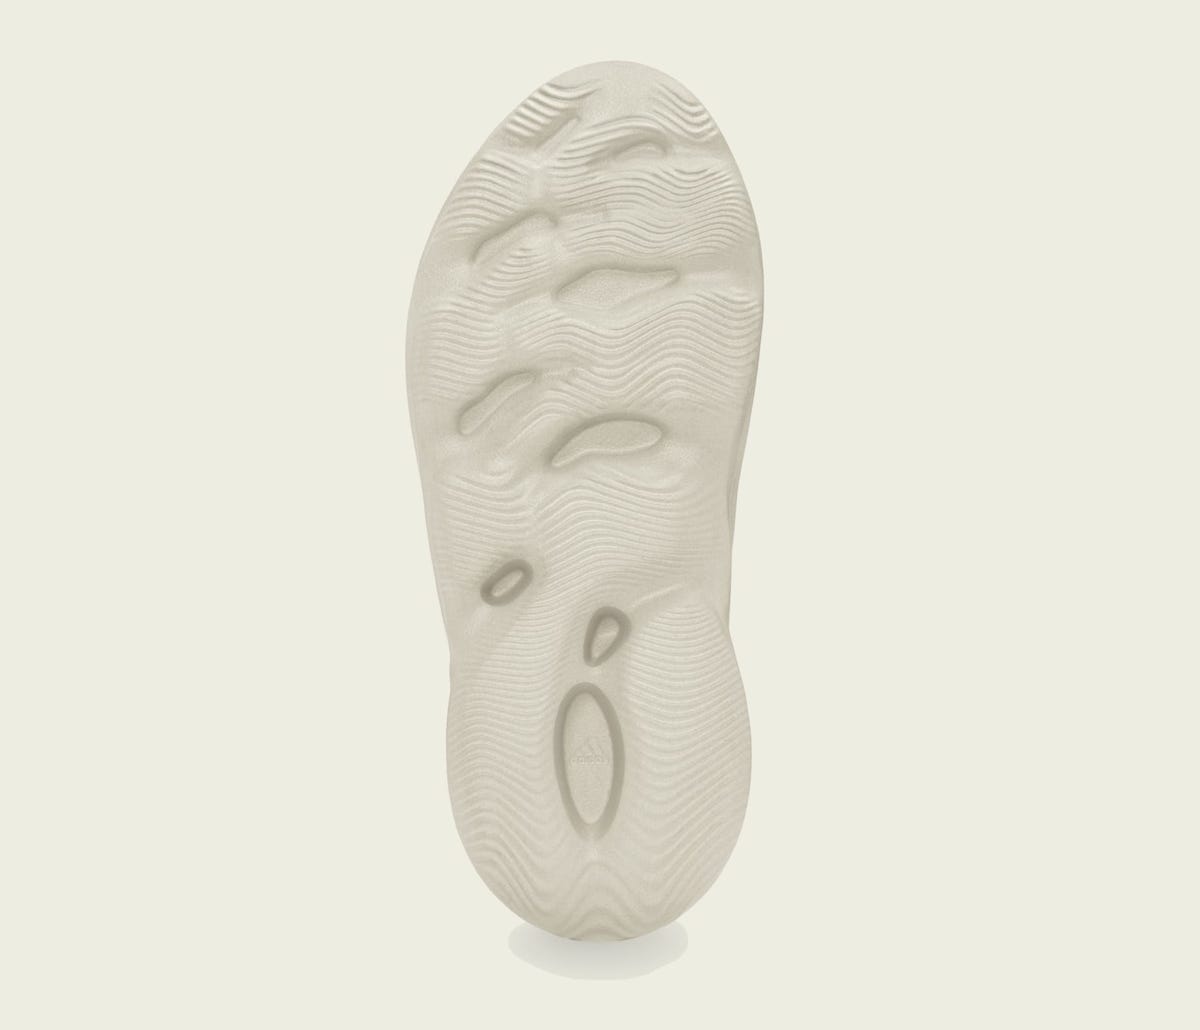 adidas Yeezy Foam Runner Sand FY4567 Restock Release Date